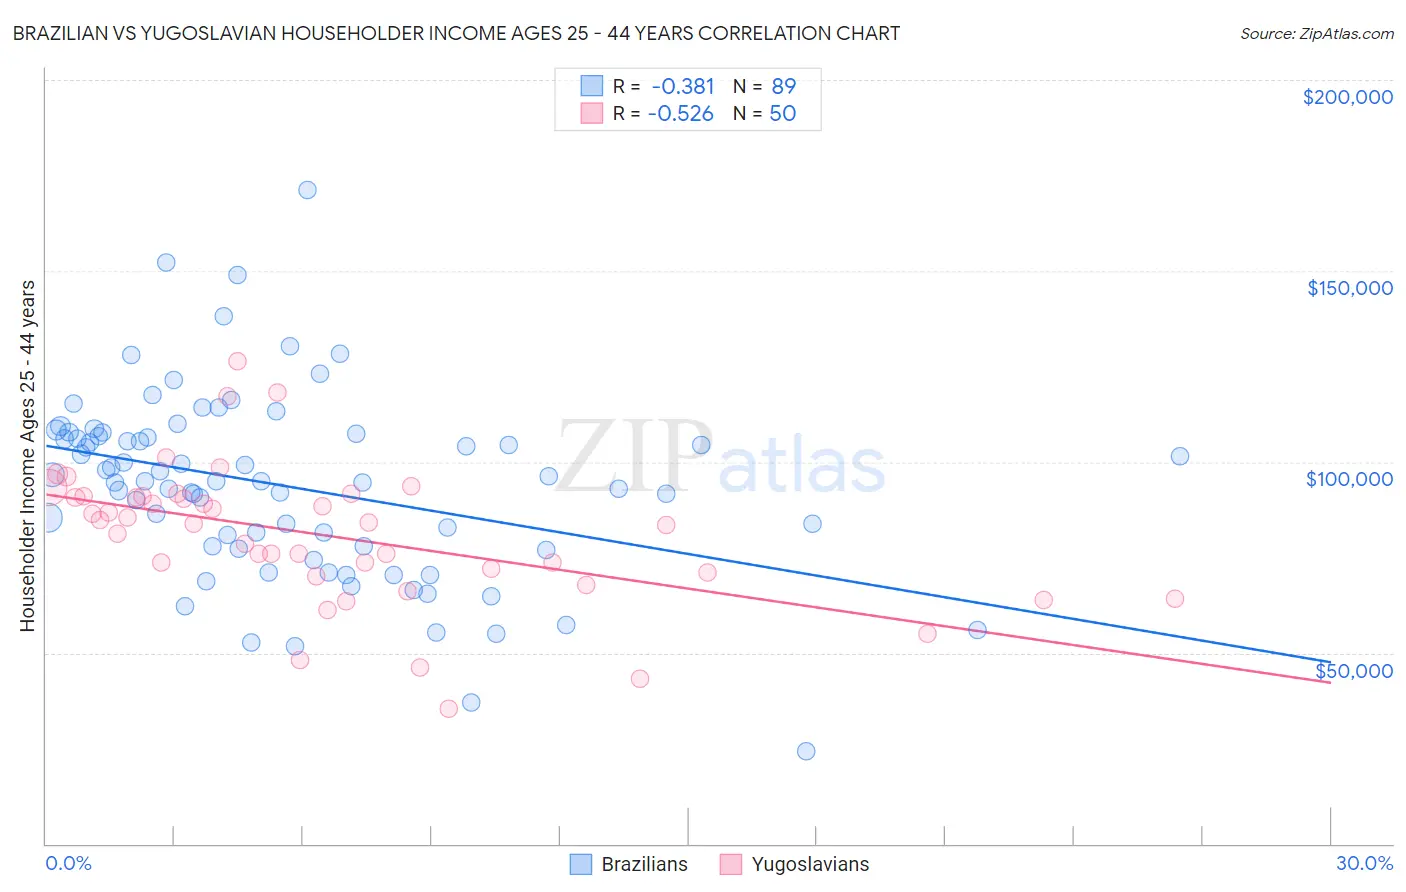 Brazilian vs Yugoslavian Householder Income Ages 25 - 44 years